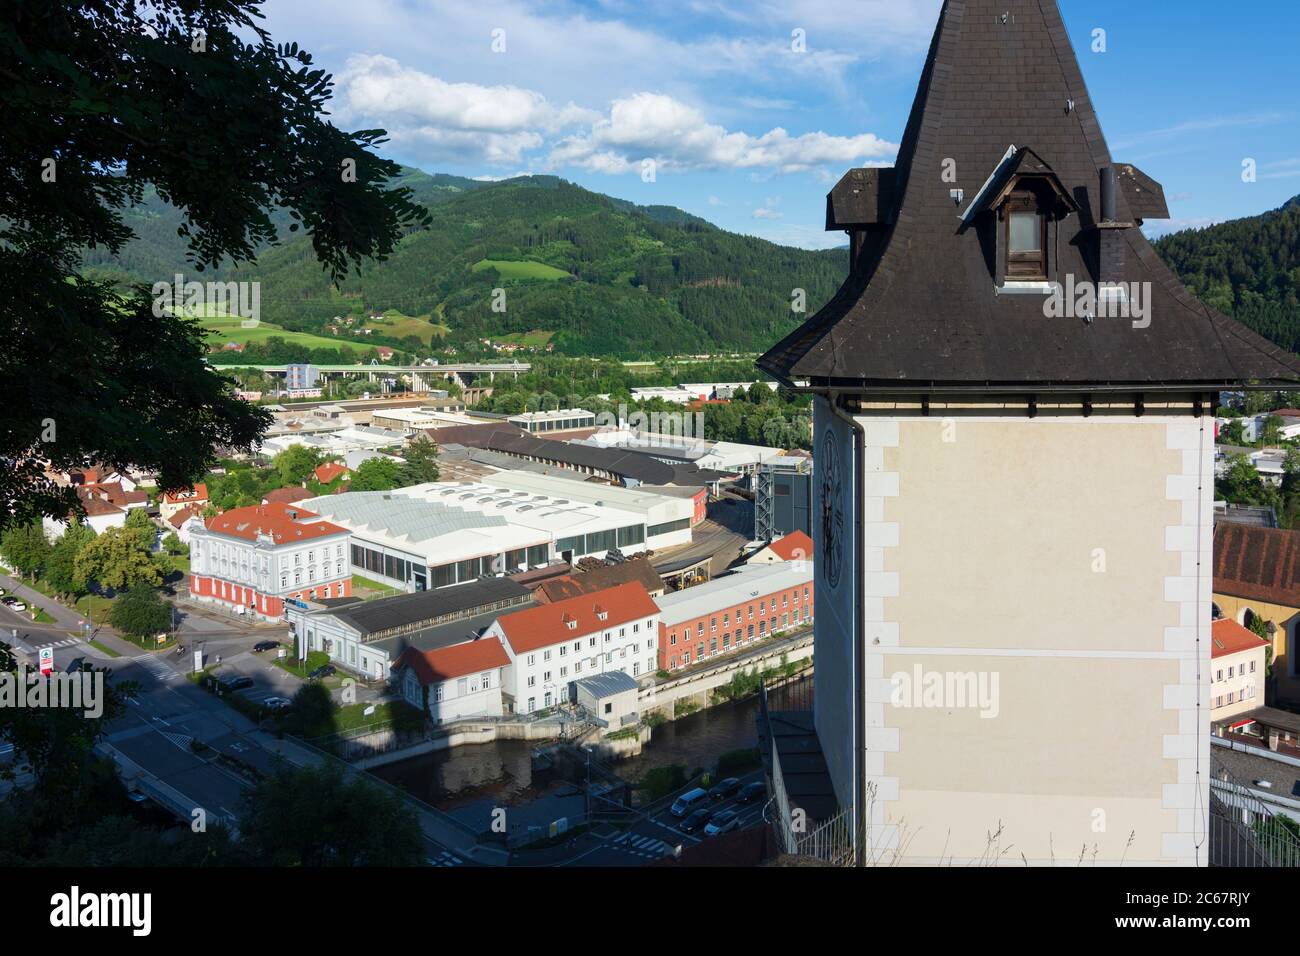 Bruck an der Mur: Torre dell'Orologio sullo Schlossberg, fabbrica di tecnologia voestalpine a Murau-Murtal, Steiermark, Stiria, Austria Foto Stock